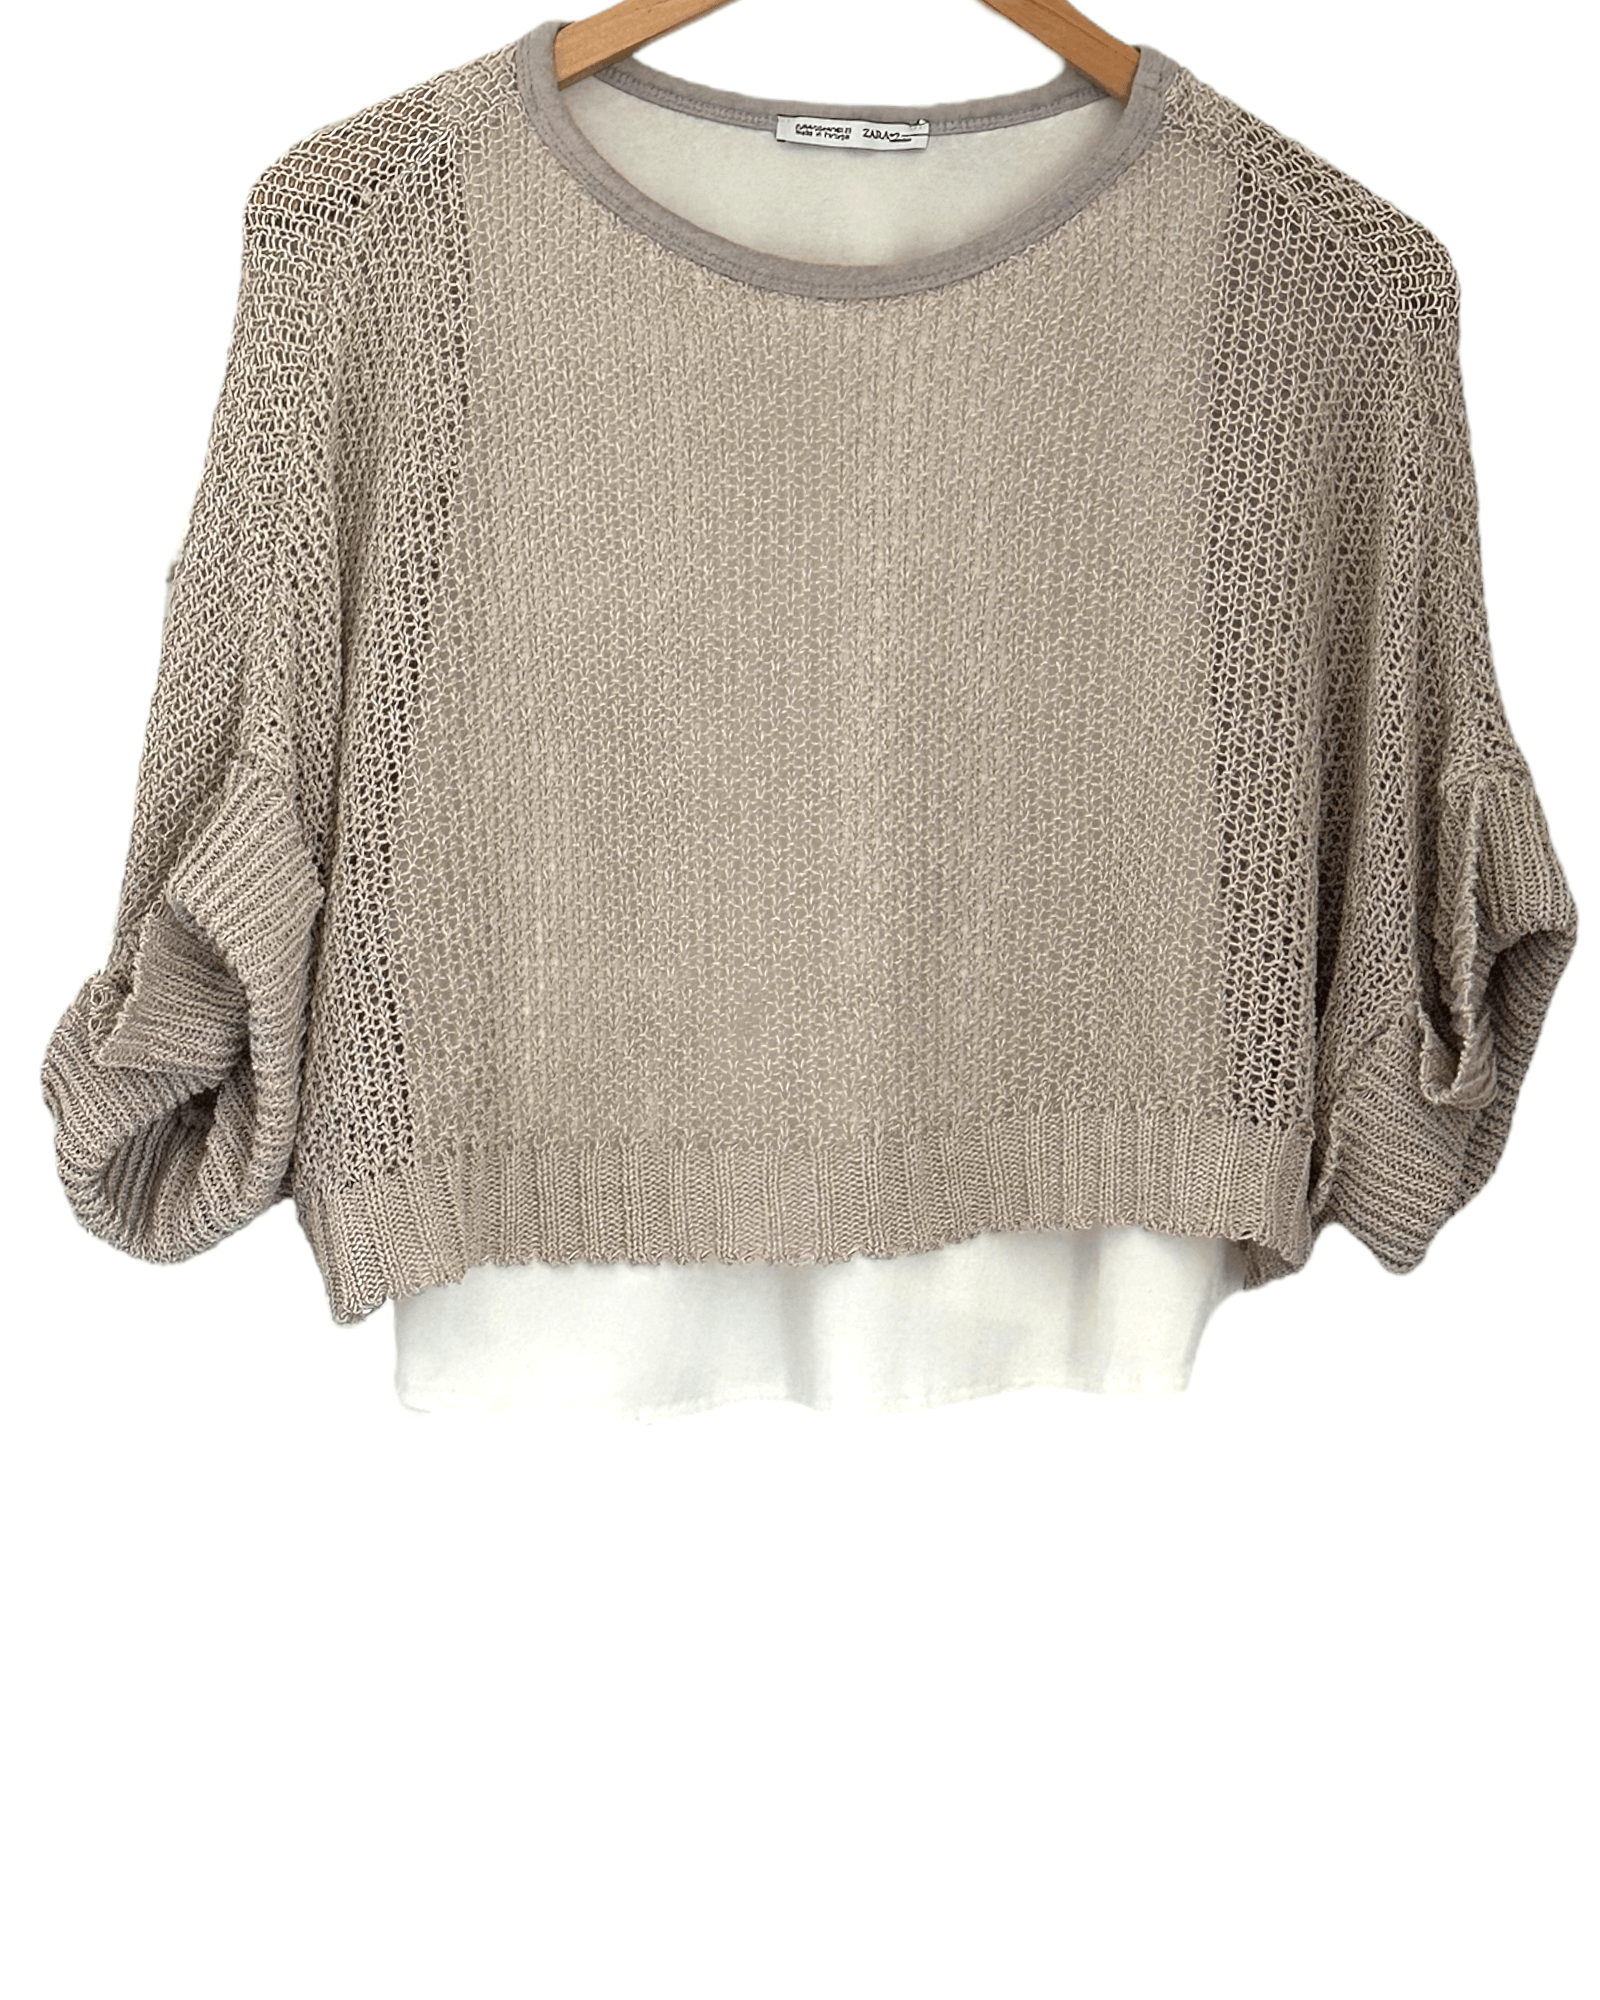 Light Summer ZARA champagne open knit layered sweater